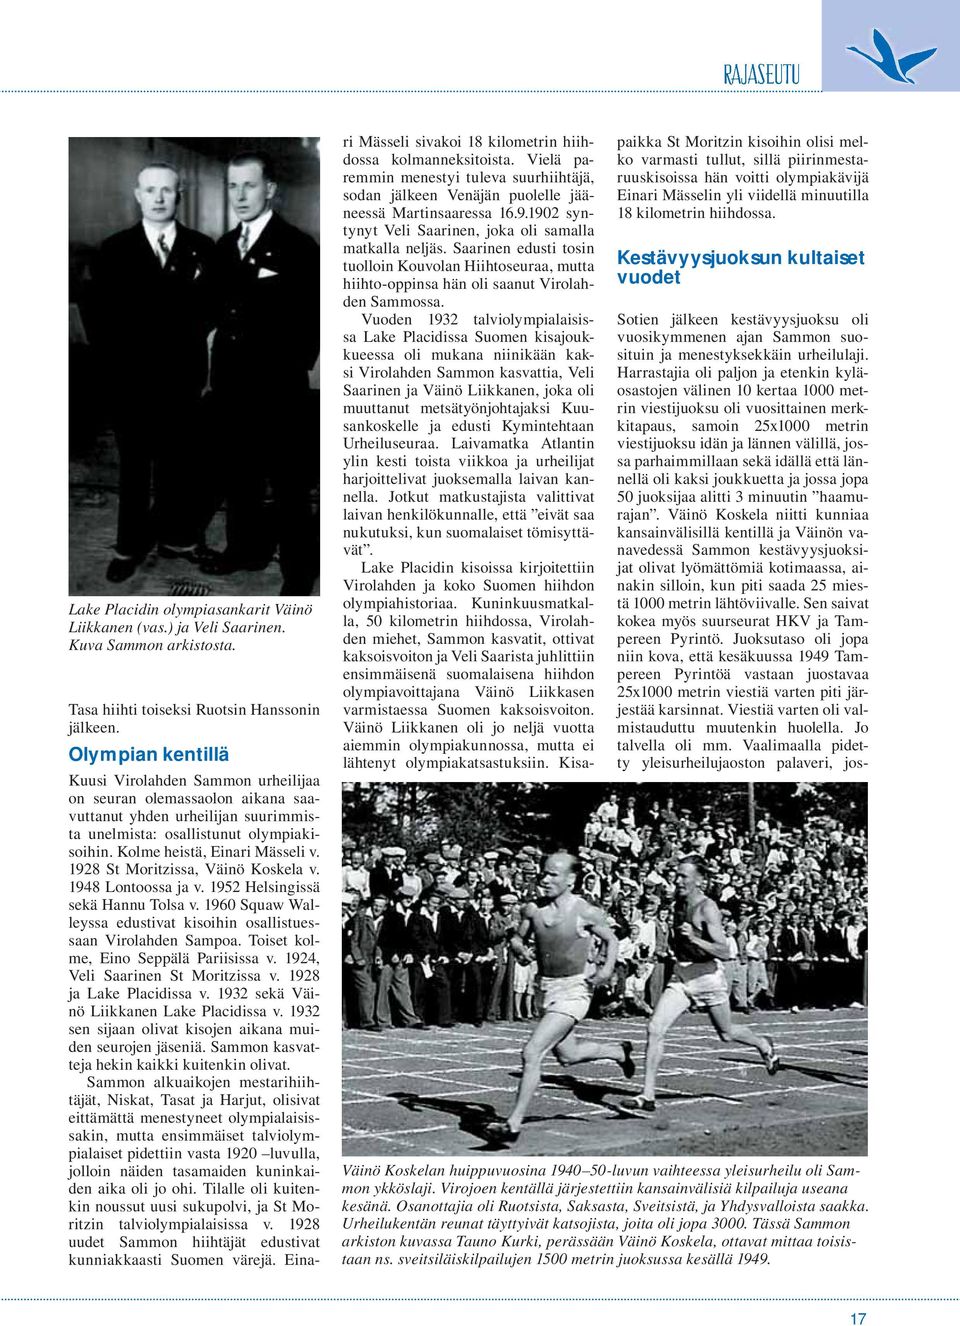 1928 St Moritzissa, Väinö Koskela v. 1948 Lontoossa ja v. 1952 Helsingissä sekä Hannu Tolsa v. 1960 Squaw Walleyssa edustivat kisoihin osallistuessaan Virolahden Sampoa.